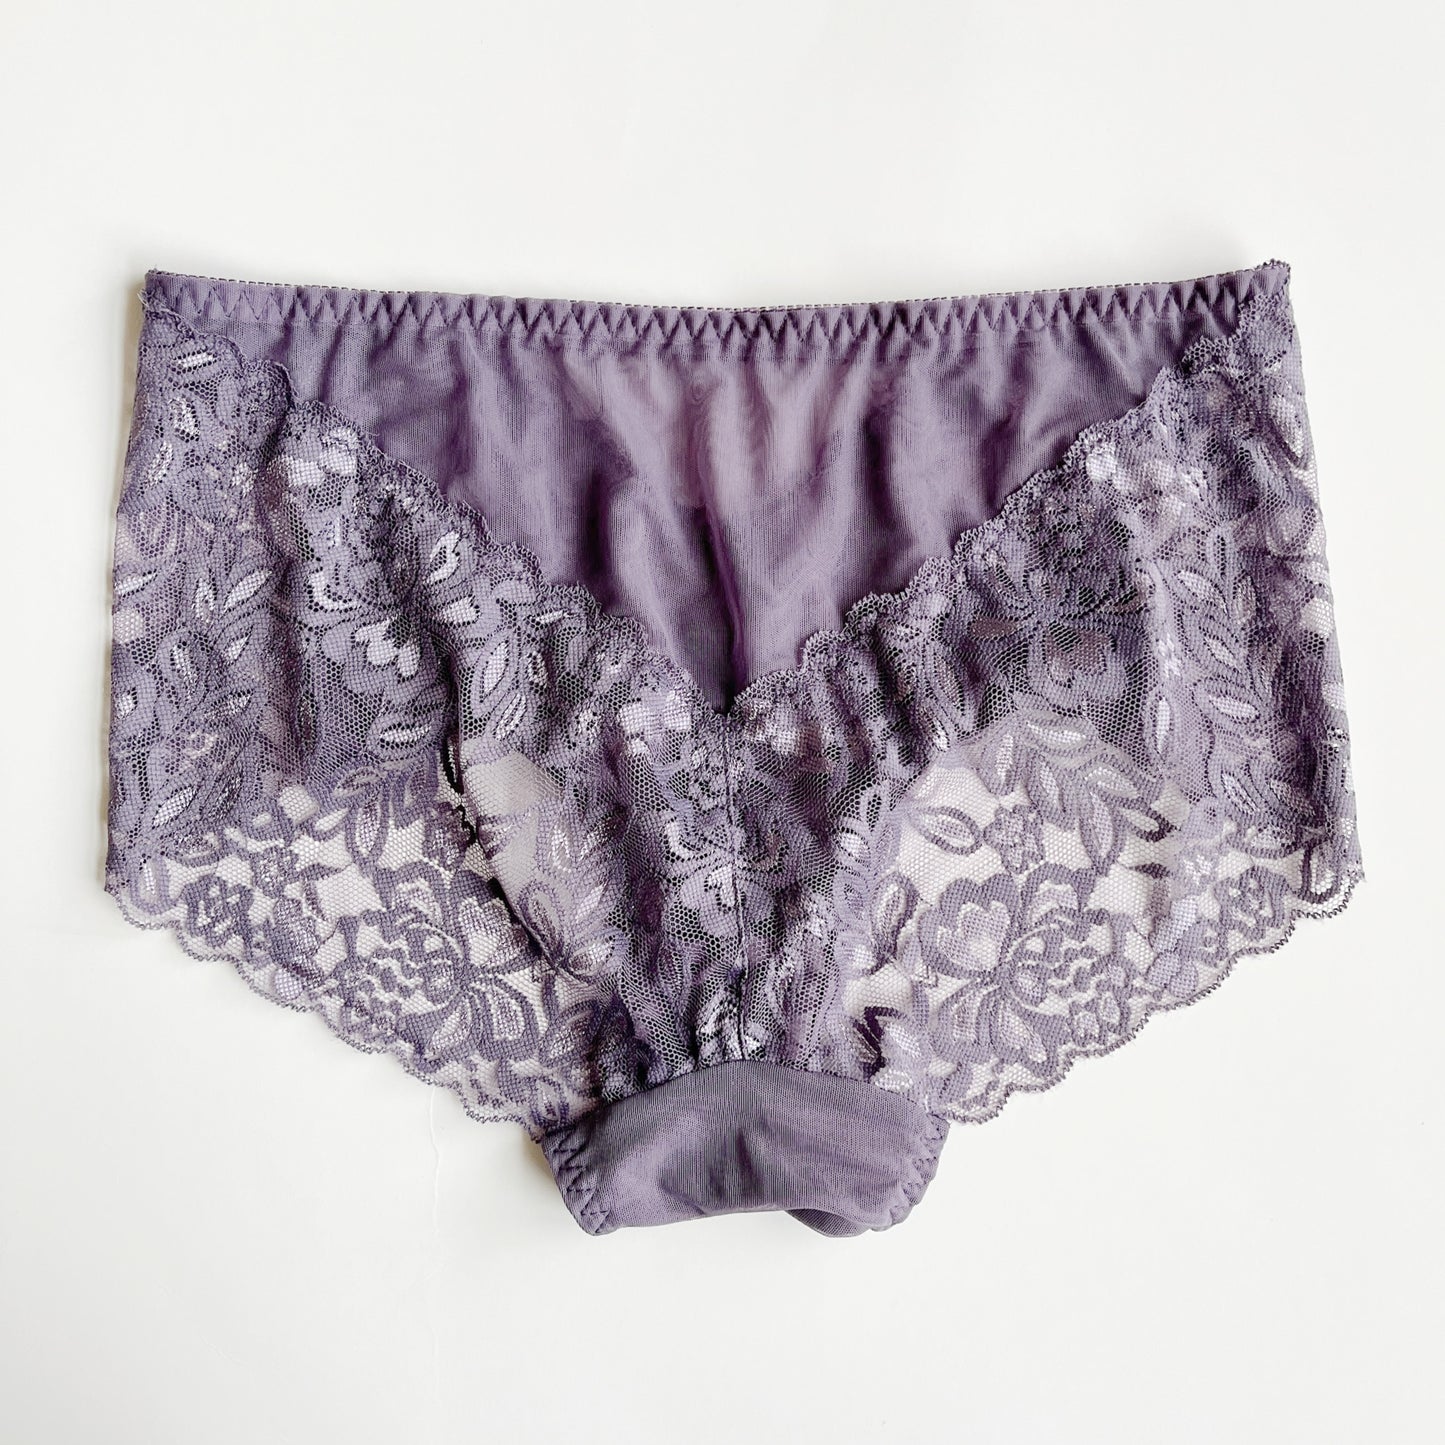 high cut silk panties high waist | Made in Canada scalloped lace underwear 